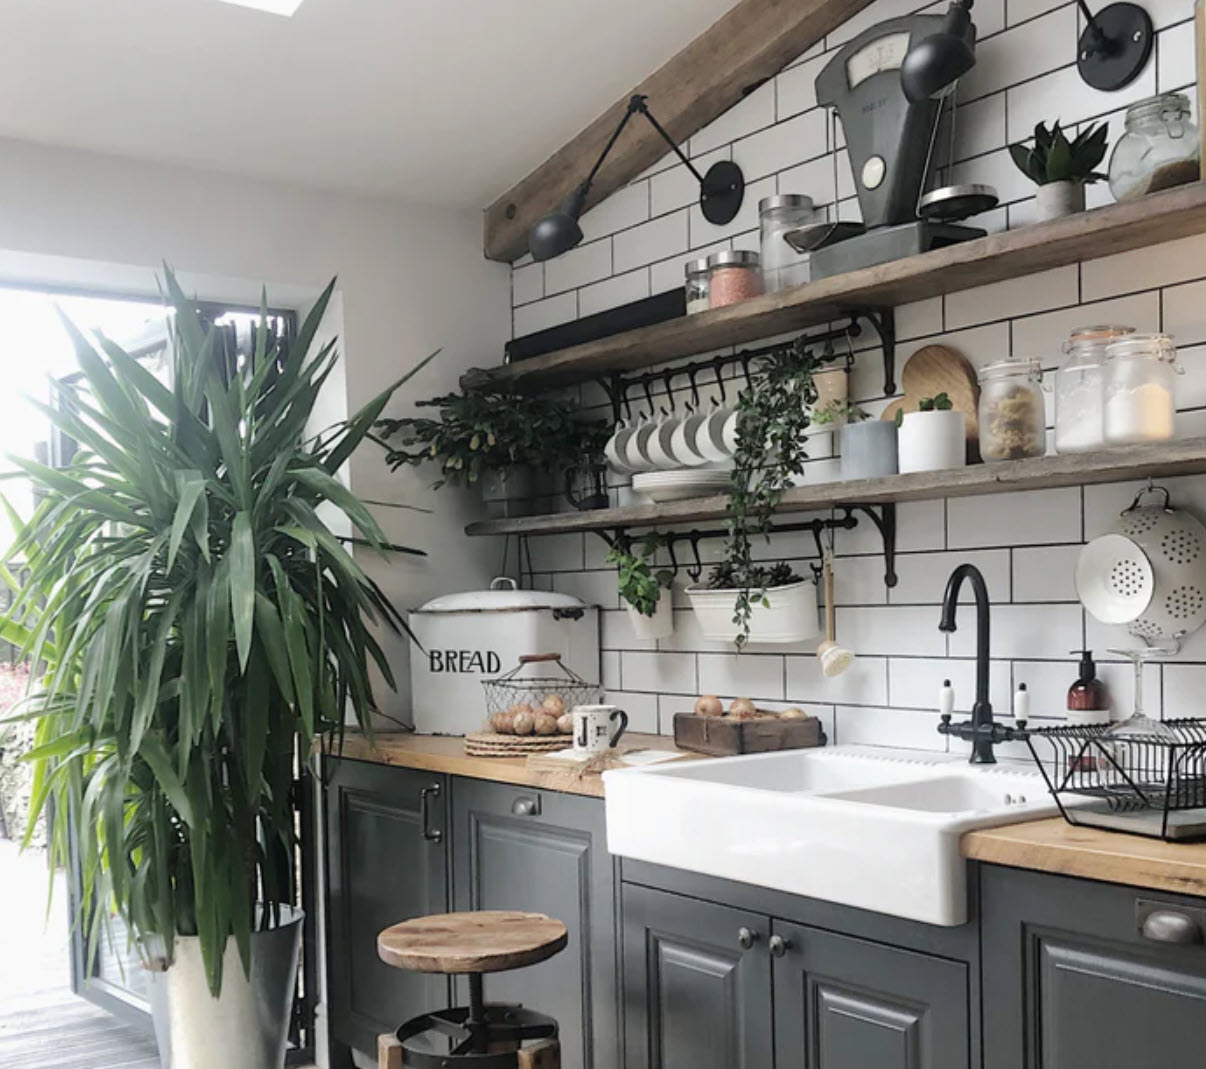 DIY Painted Kitchen Cabinets - Dramatically transform your kitchen for under $100 | Hometalk